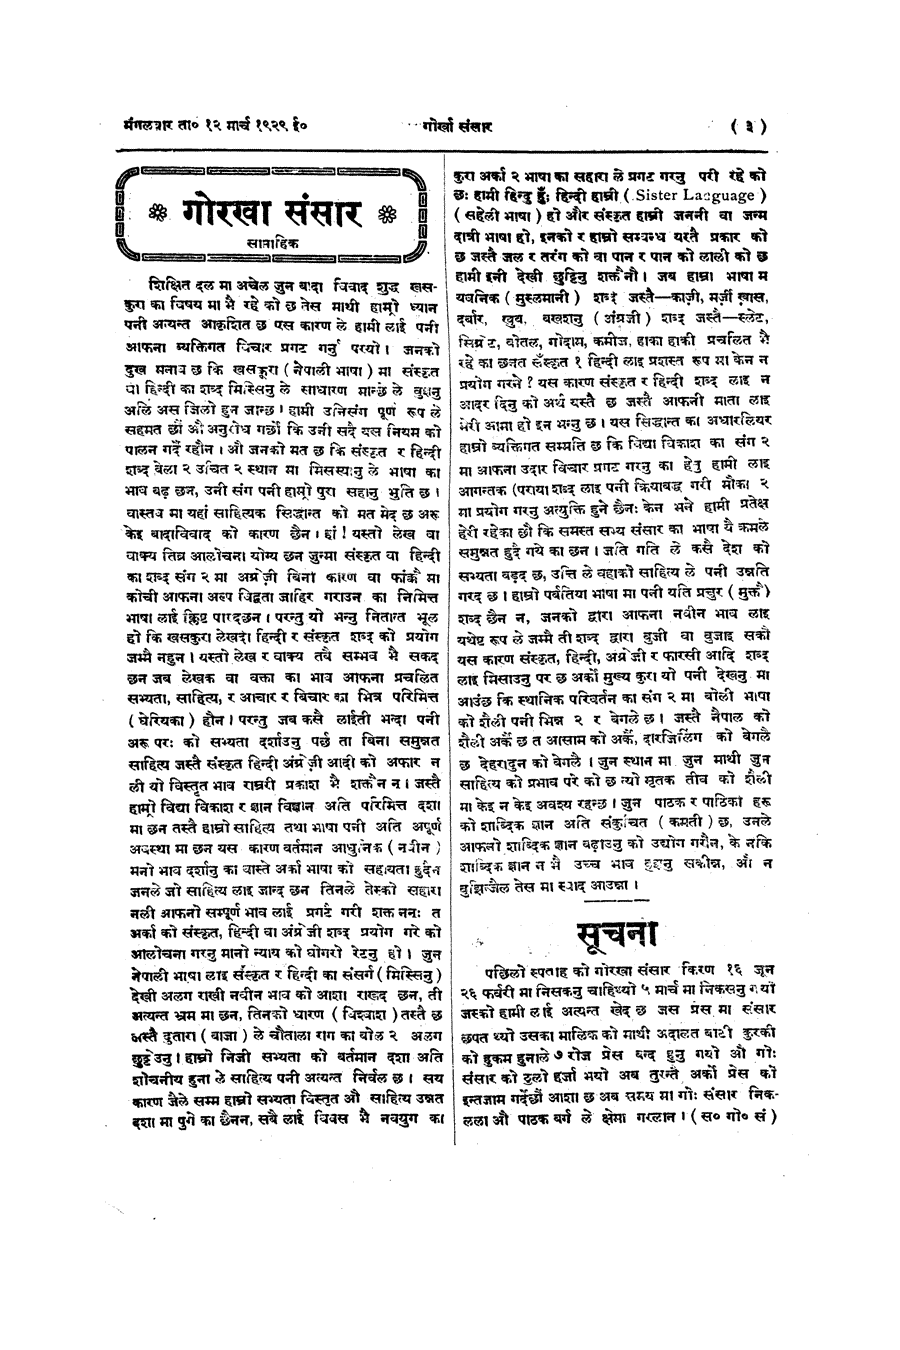 Gorkha Sansar, 12 Mar 1929, page 3